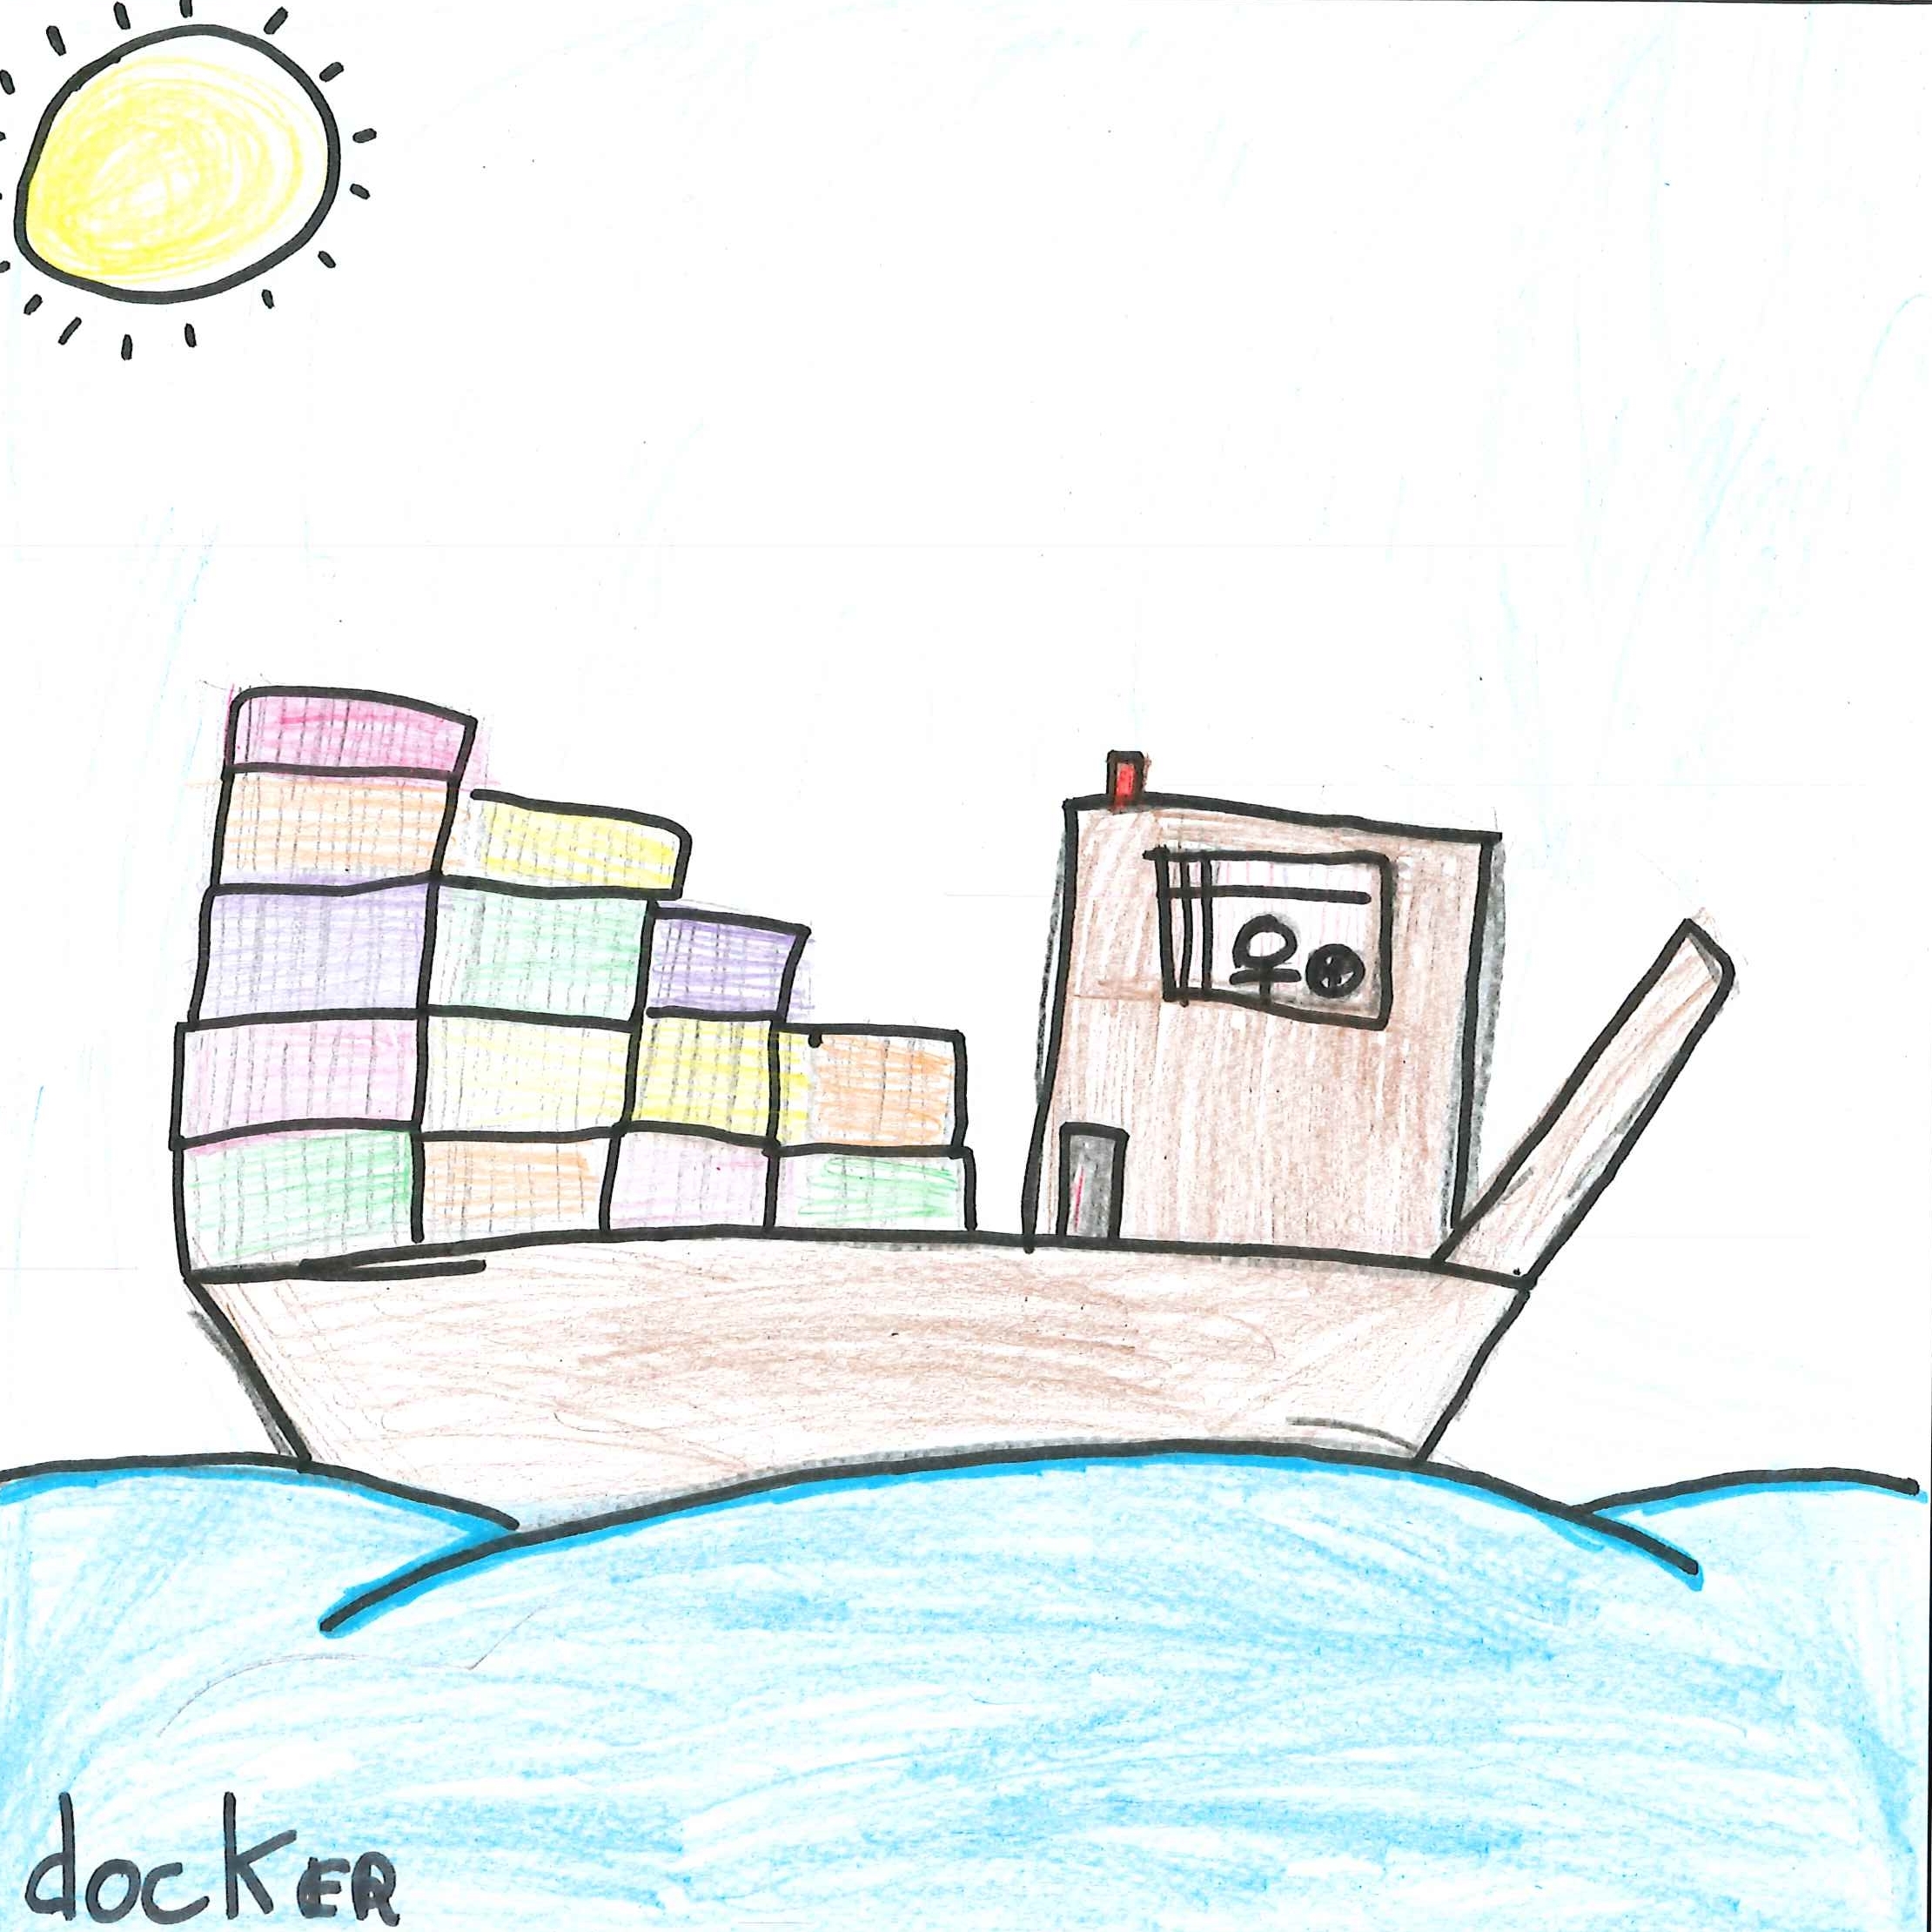 Dessin de Lola (10 ans). Mot: DockerTechnique: Crayons.